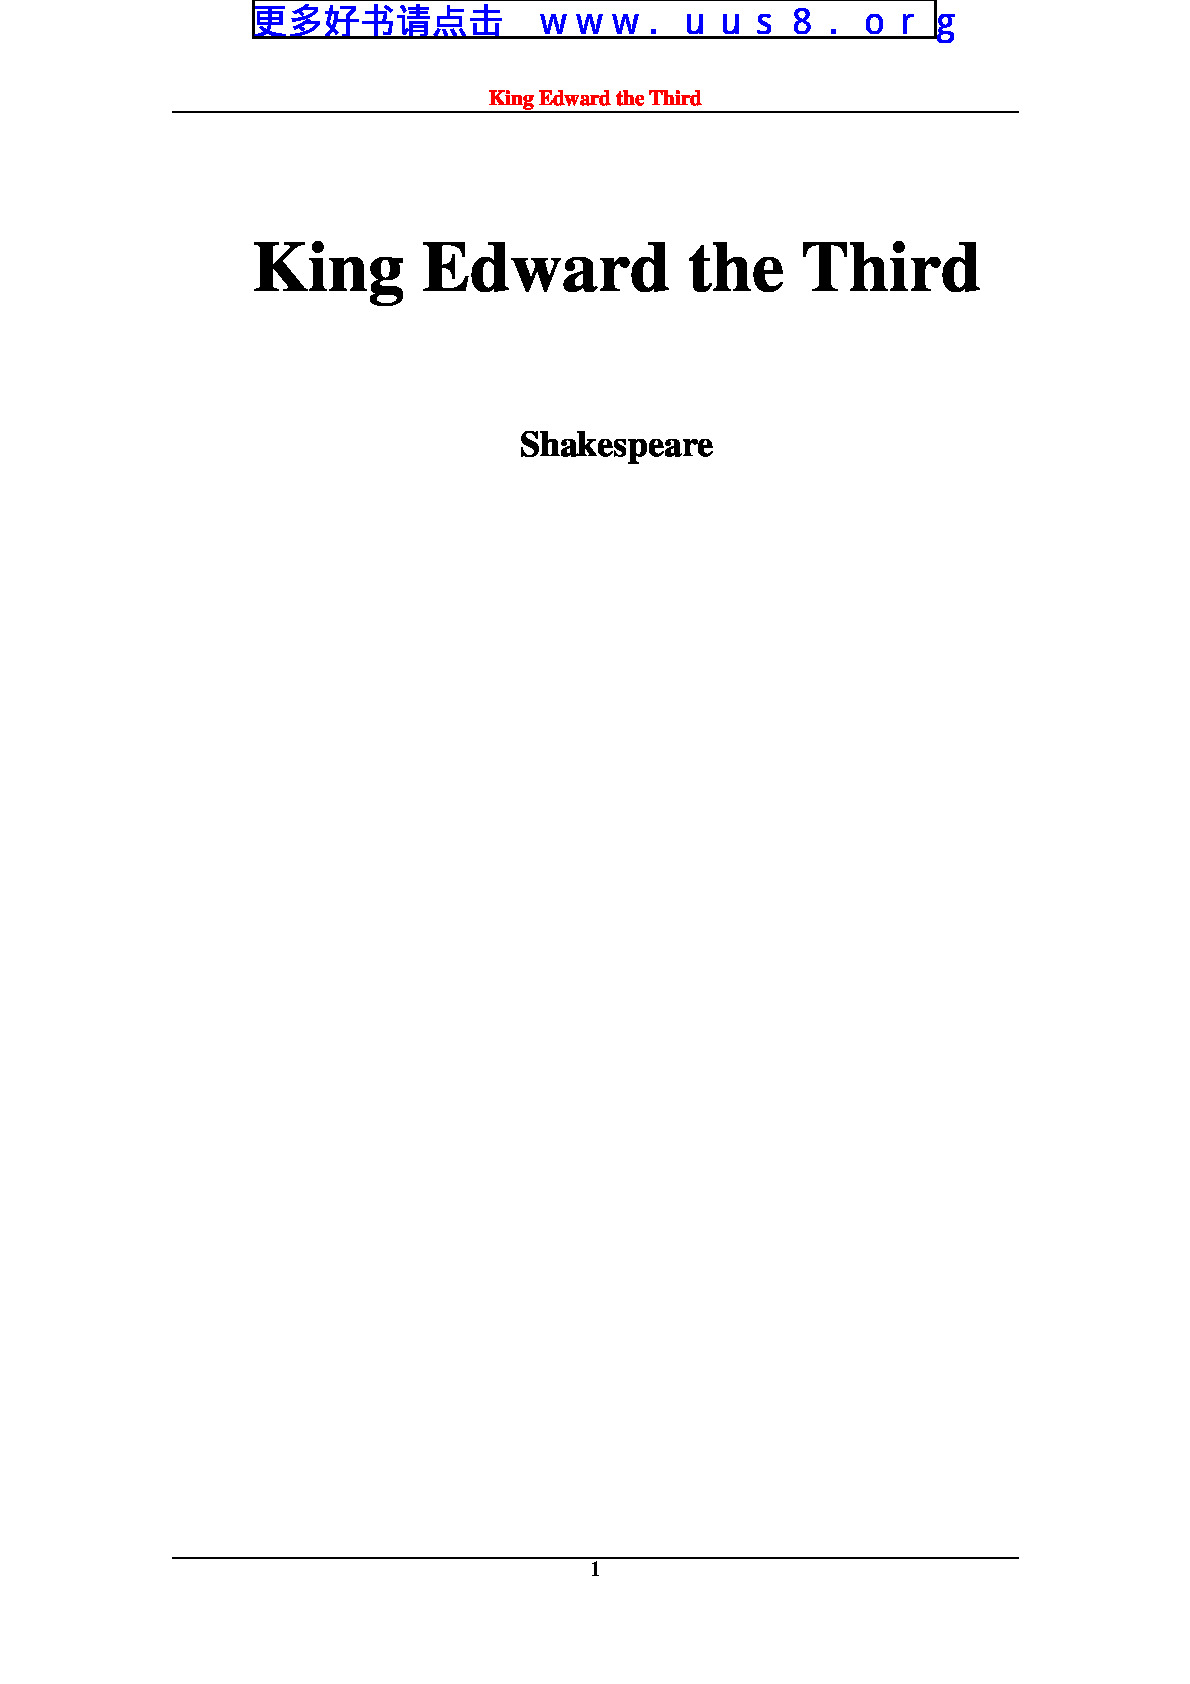 King_Edward_the_Third(爱德华三世)